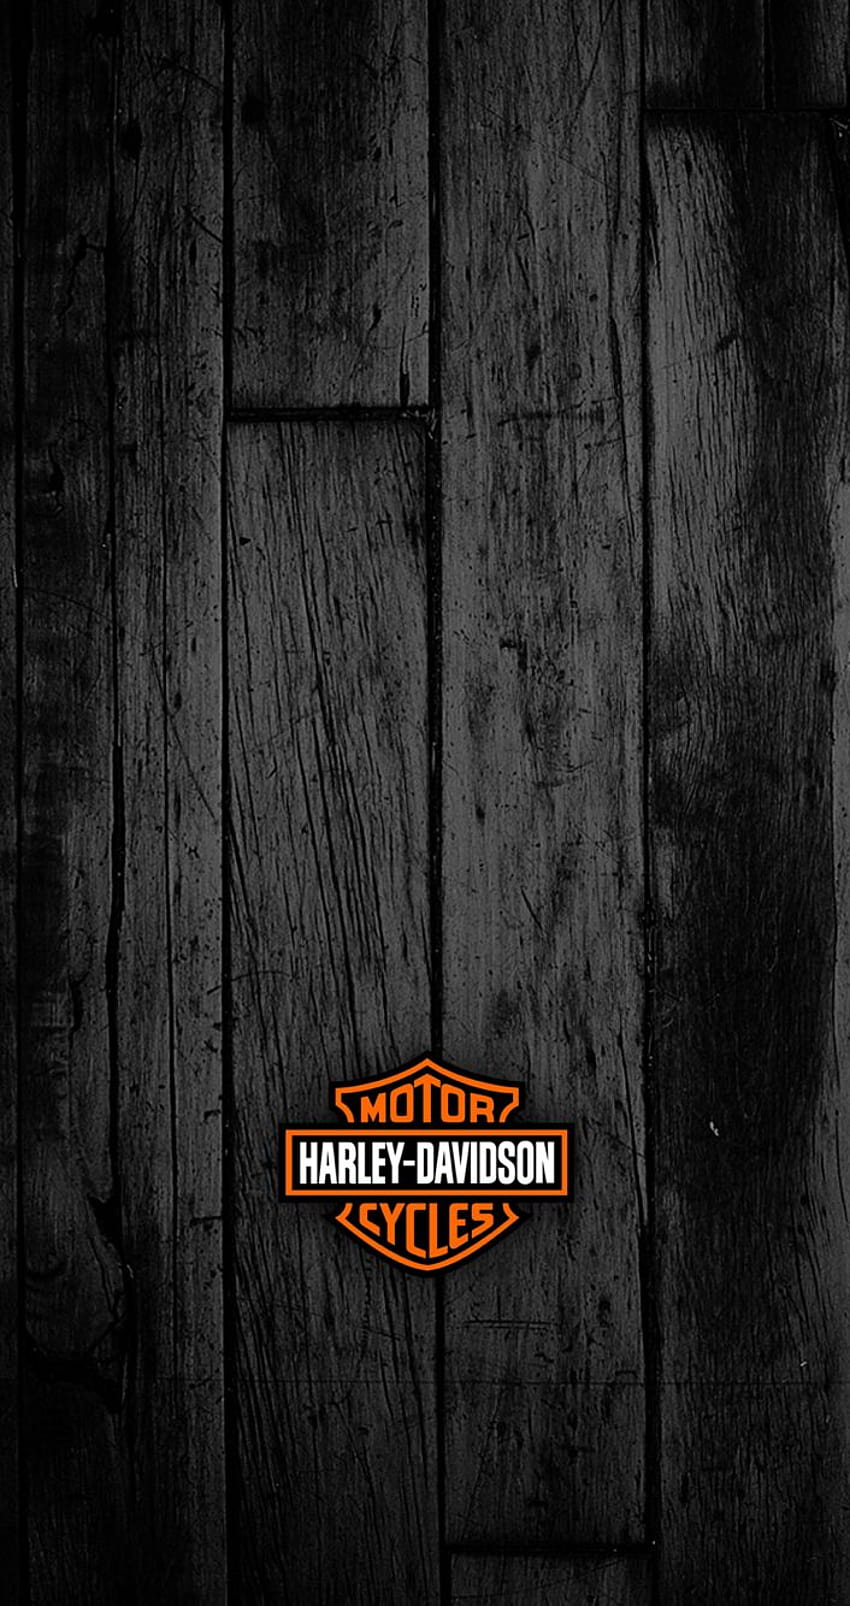 Free download Harley Phone Wallpapers Harley davidson wallpaper Harley  720x1700 for your Desktop Mobile  Tablet  Explore 41 Harley Davidson  Phone Wallpapers  Harley Davidson Logo Wallpaper Harley Davidson  Backgrounds Harley Davidson Wallpapers